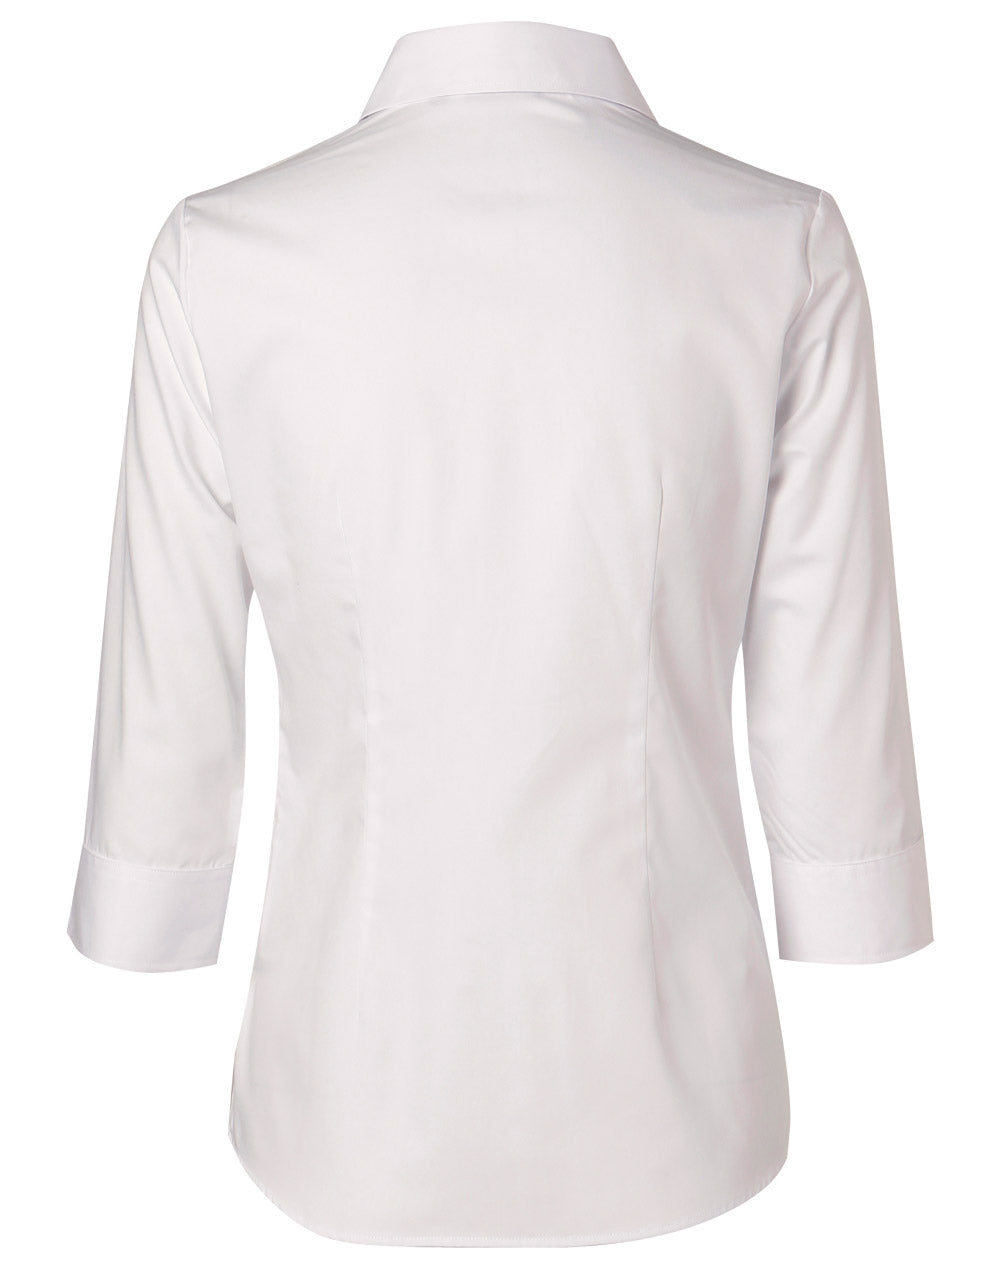 Benchmark M8020Q Women's Cotton/Poly Stretch 3/4 Sleeve Shirt